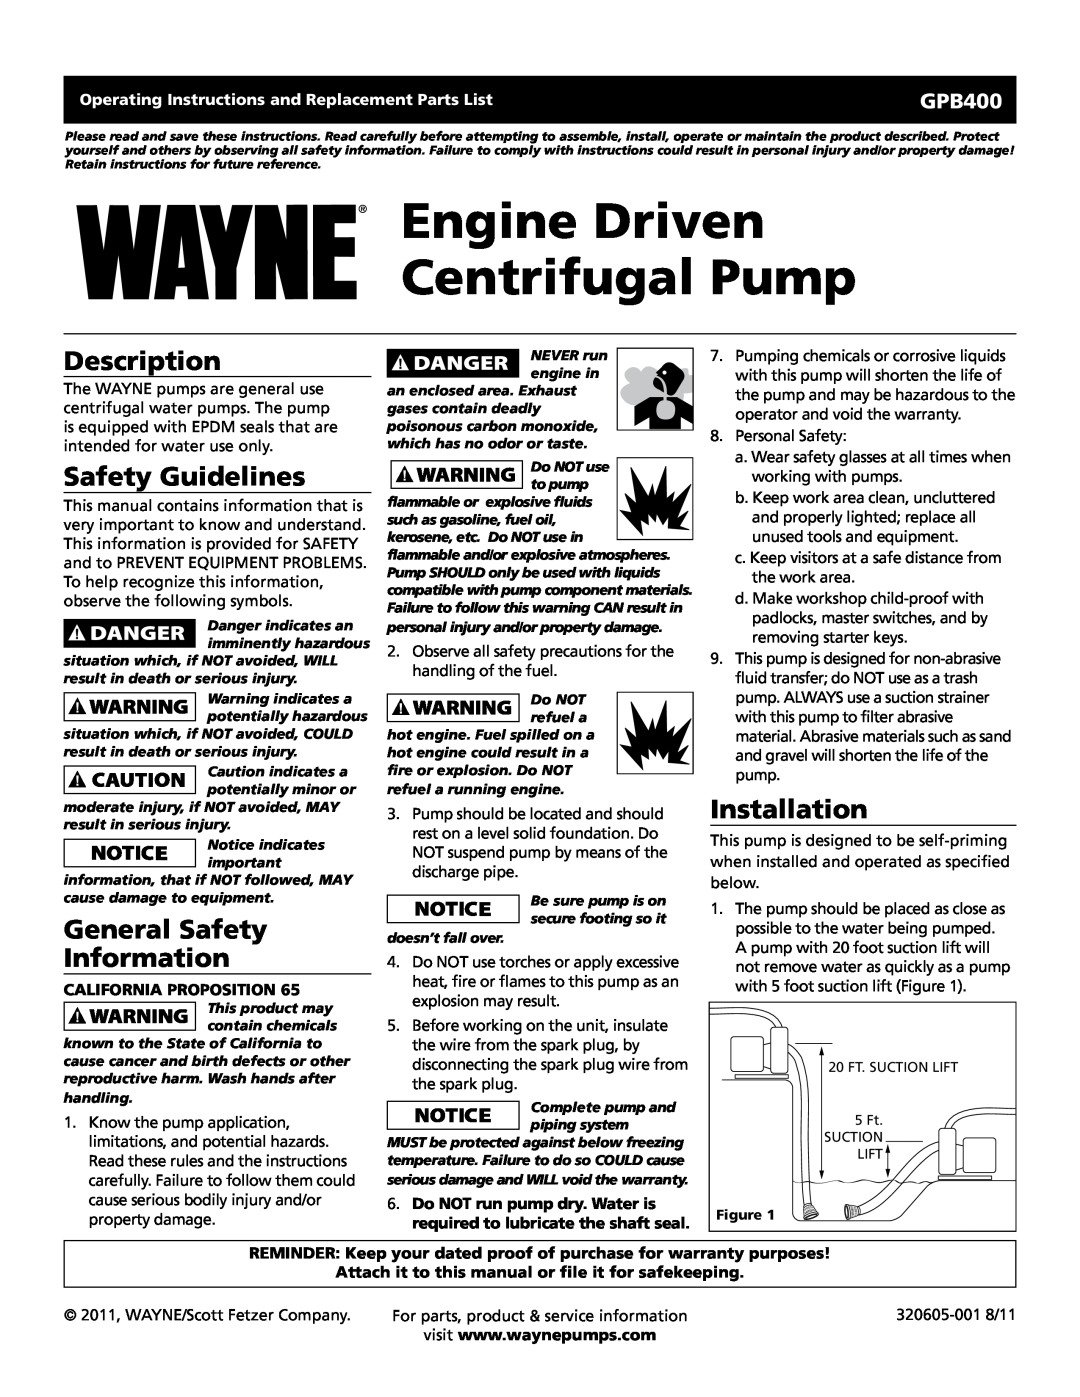 Wayne GPB400 warranty Engine Driven Centrifugal Pump, Description, Safety Guidelines, General Safety Information 